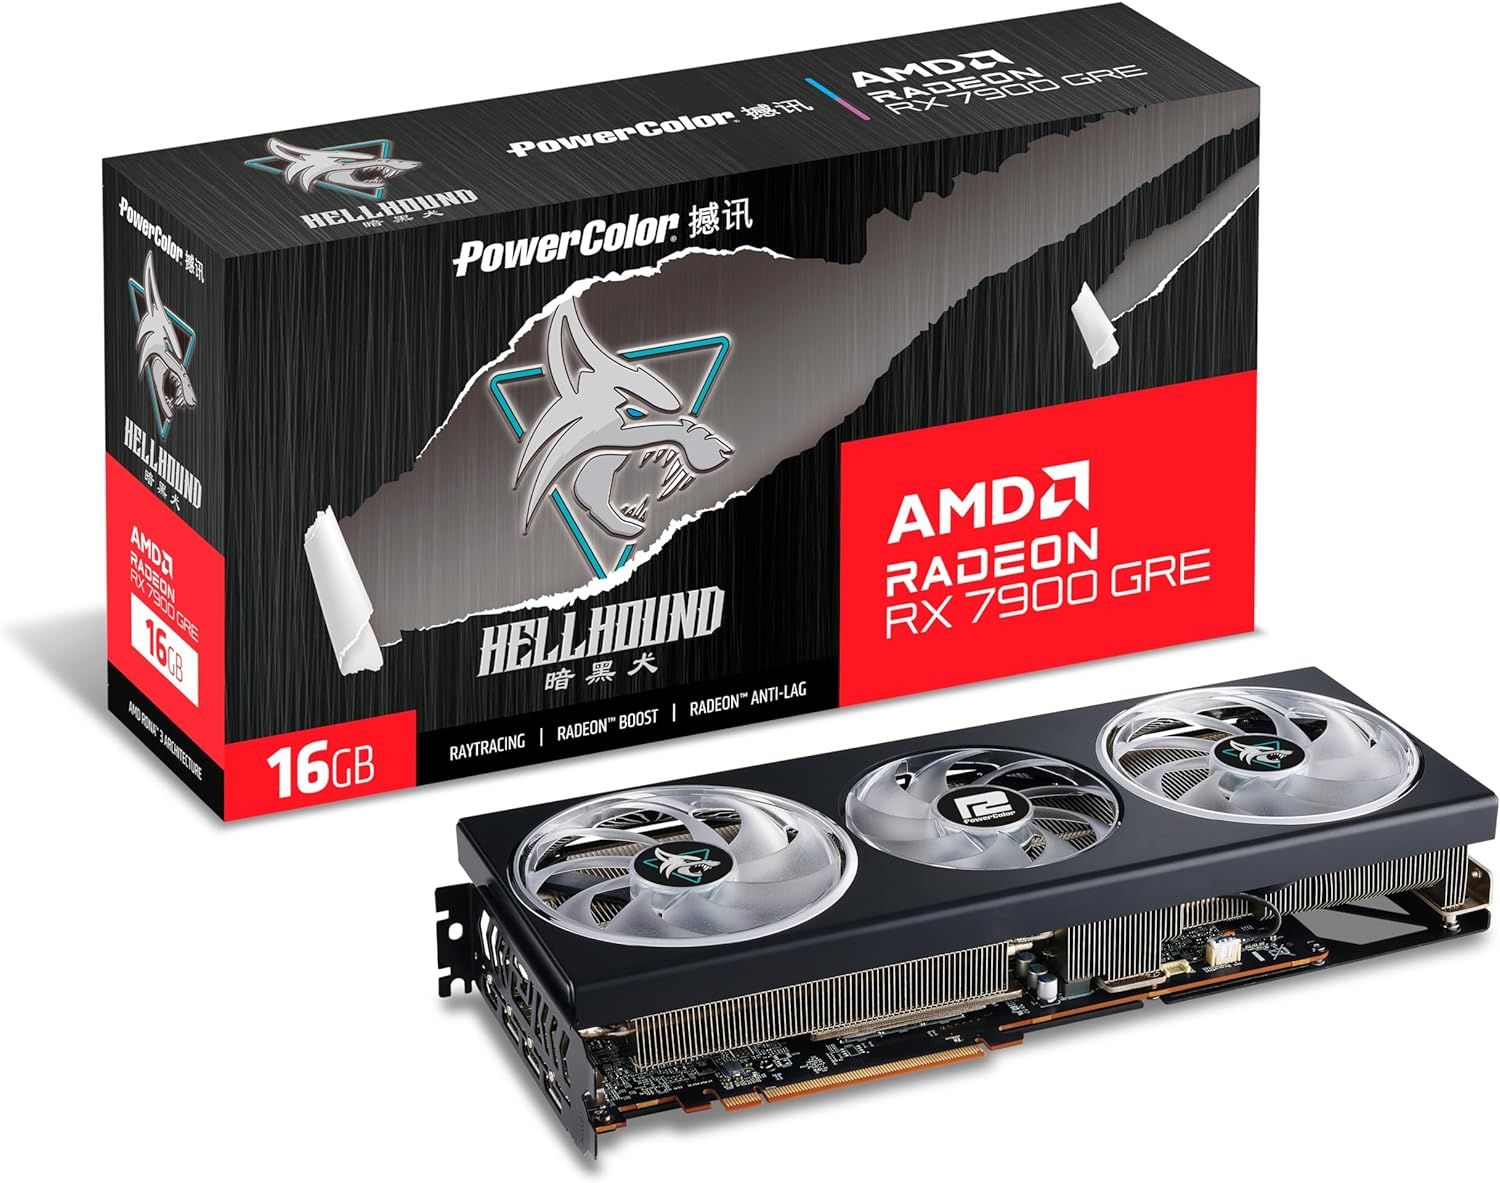 PowerColor Hellhound AMD Radeon RX 7900 GRE